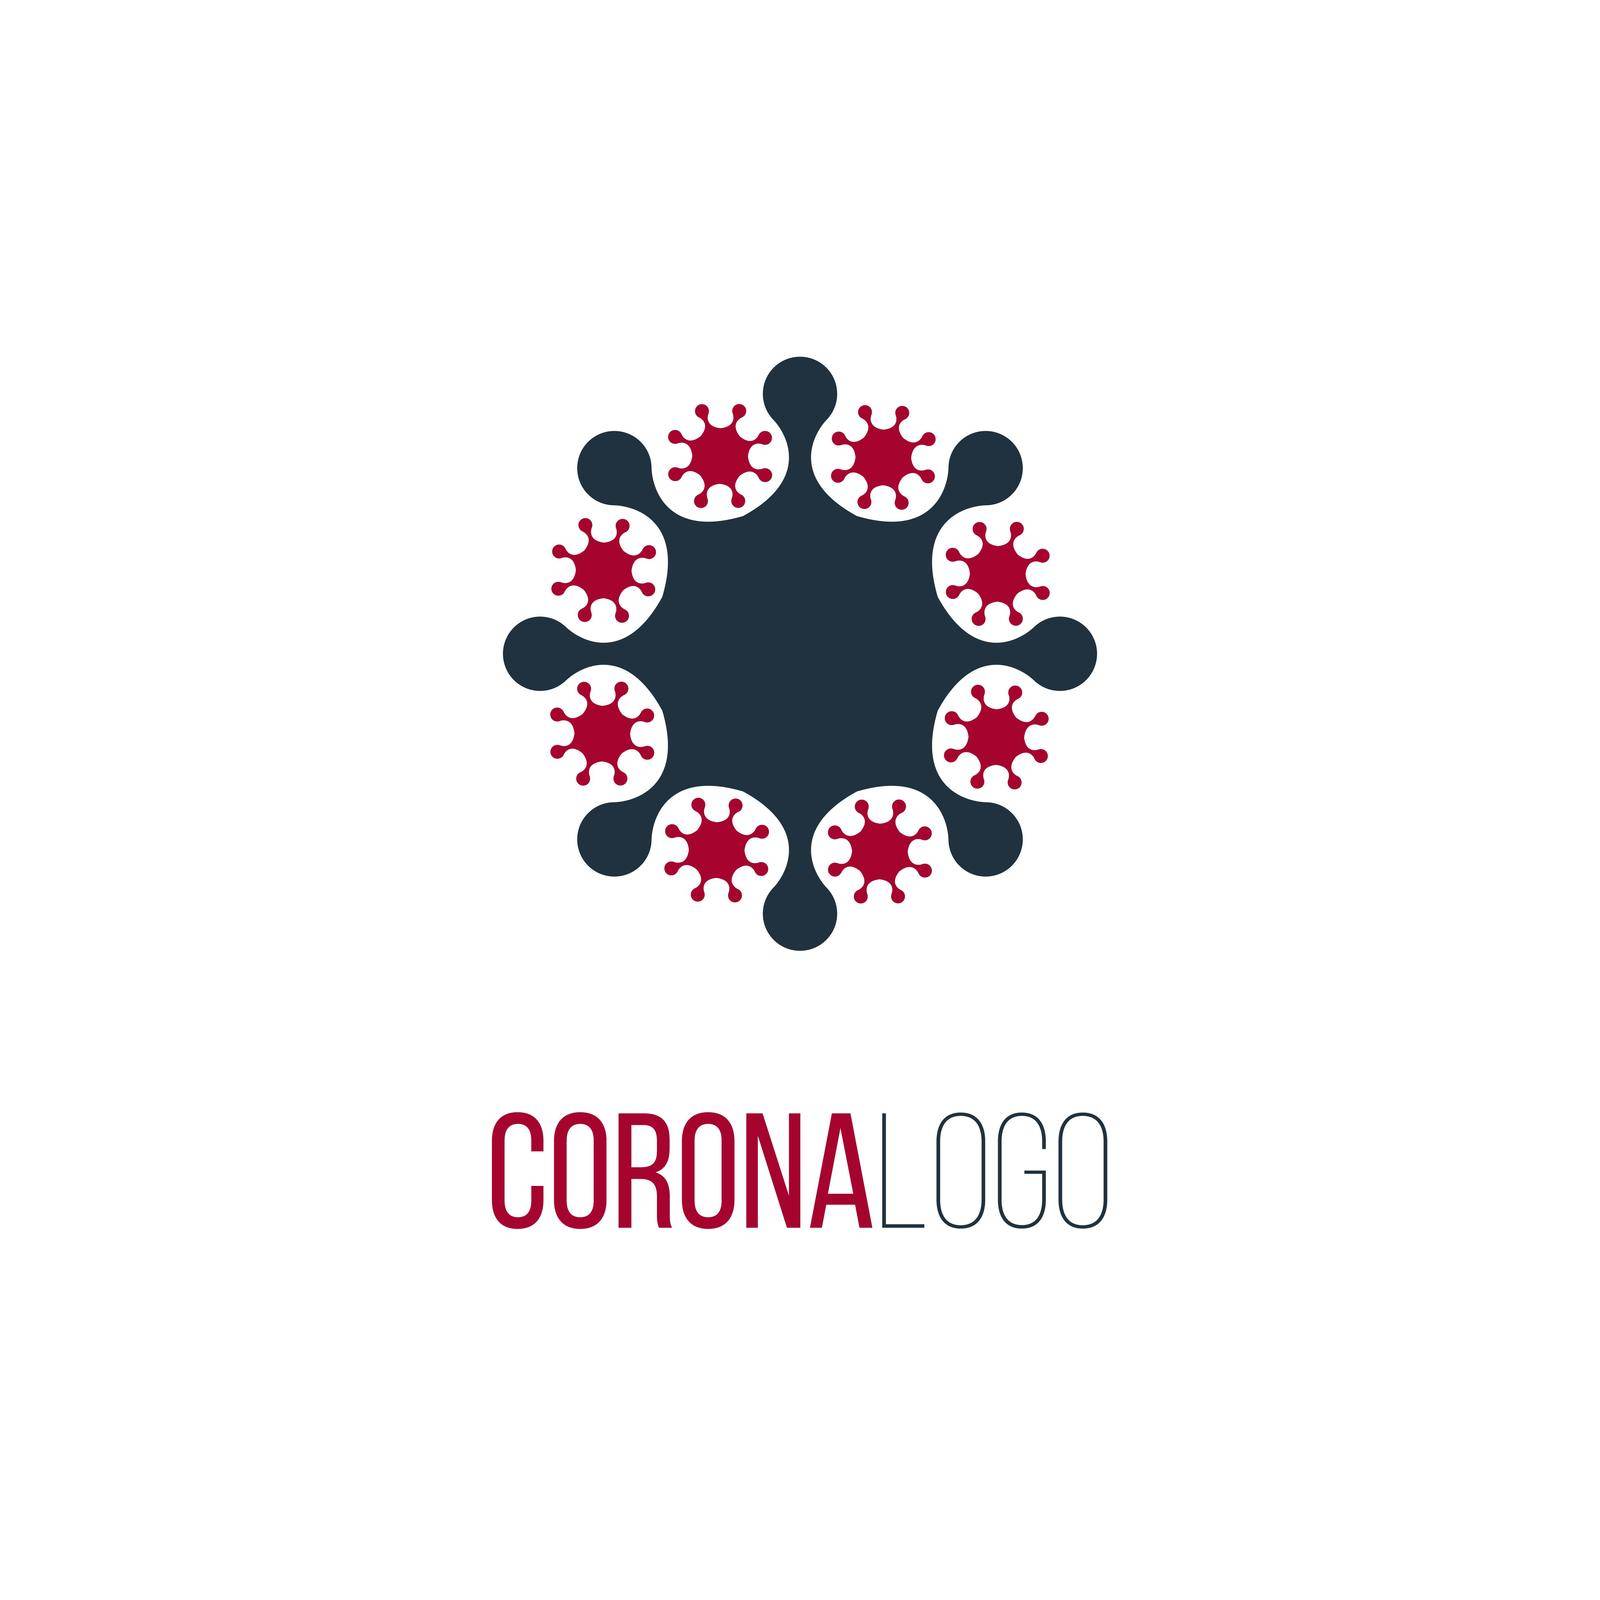 Blue abstract bacteria or virus Logo Design. Covid19 coronavirus pandemia concept. Stock vector illustration isolated